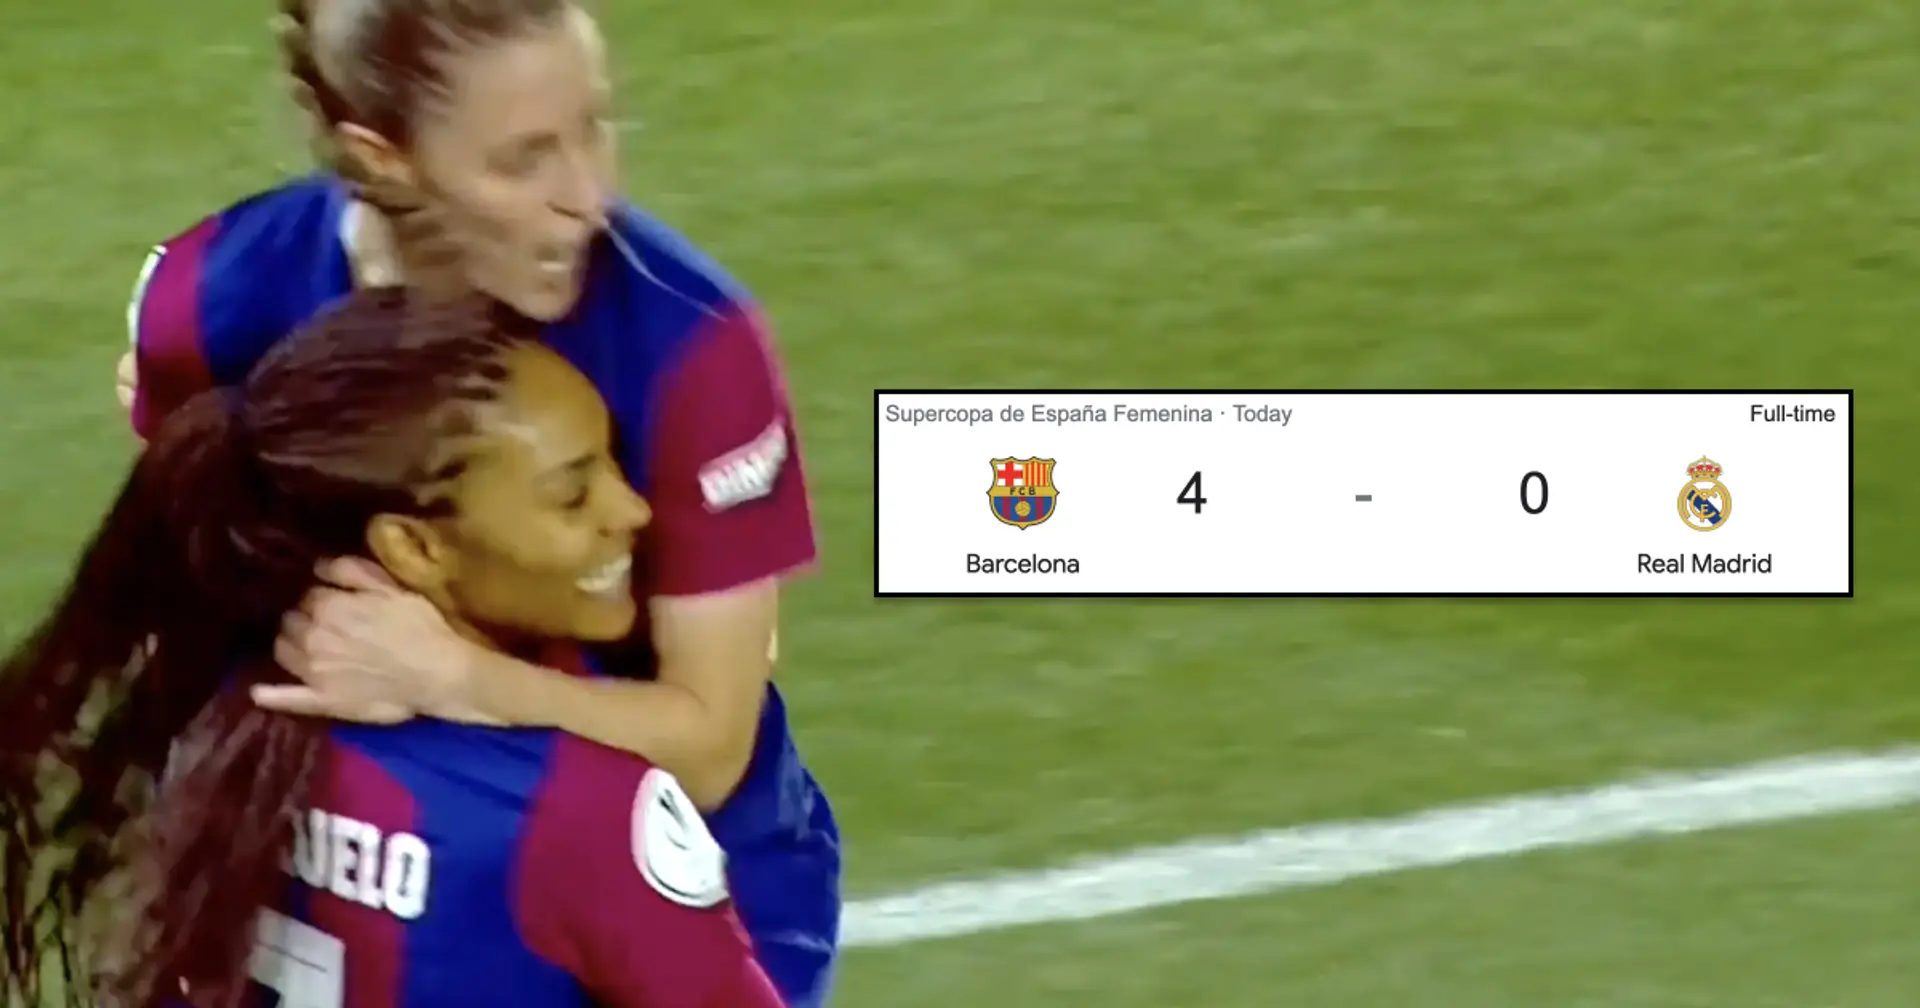 Barca Femeni thrash Real Madrid in Supercopa